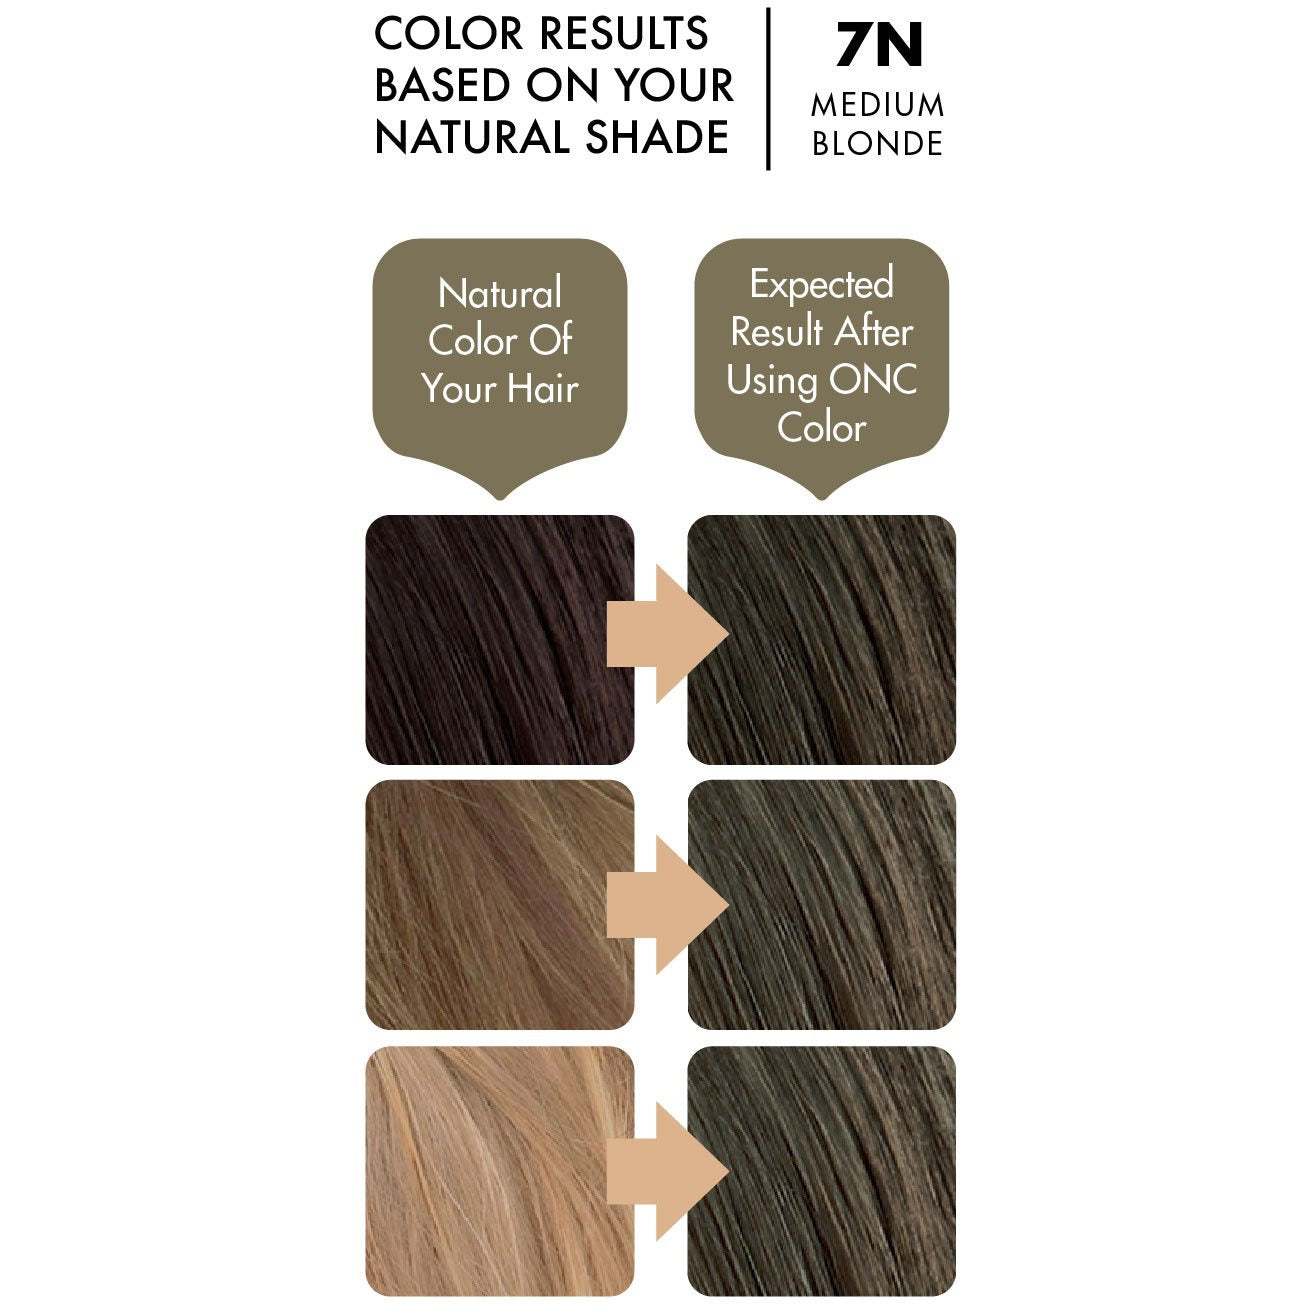 7N Natural Medium Blonde Heat Activated Hair Dye With Organic Ingredients - 120 ml (4 fl. oz)